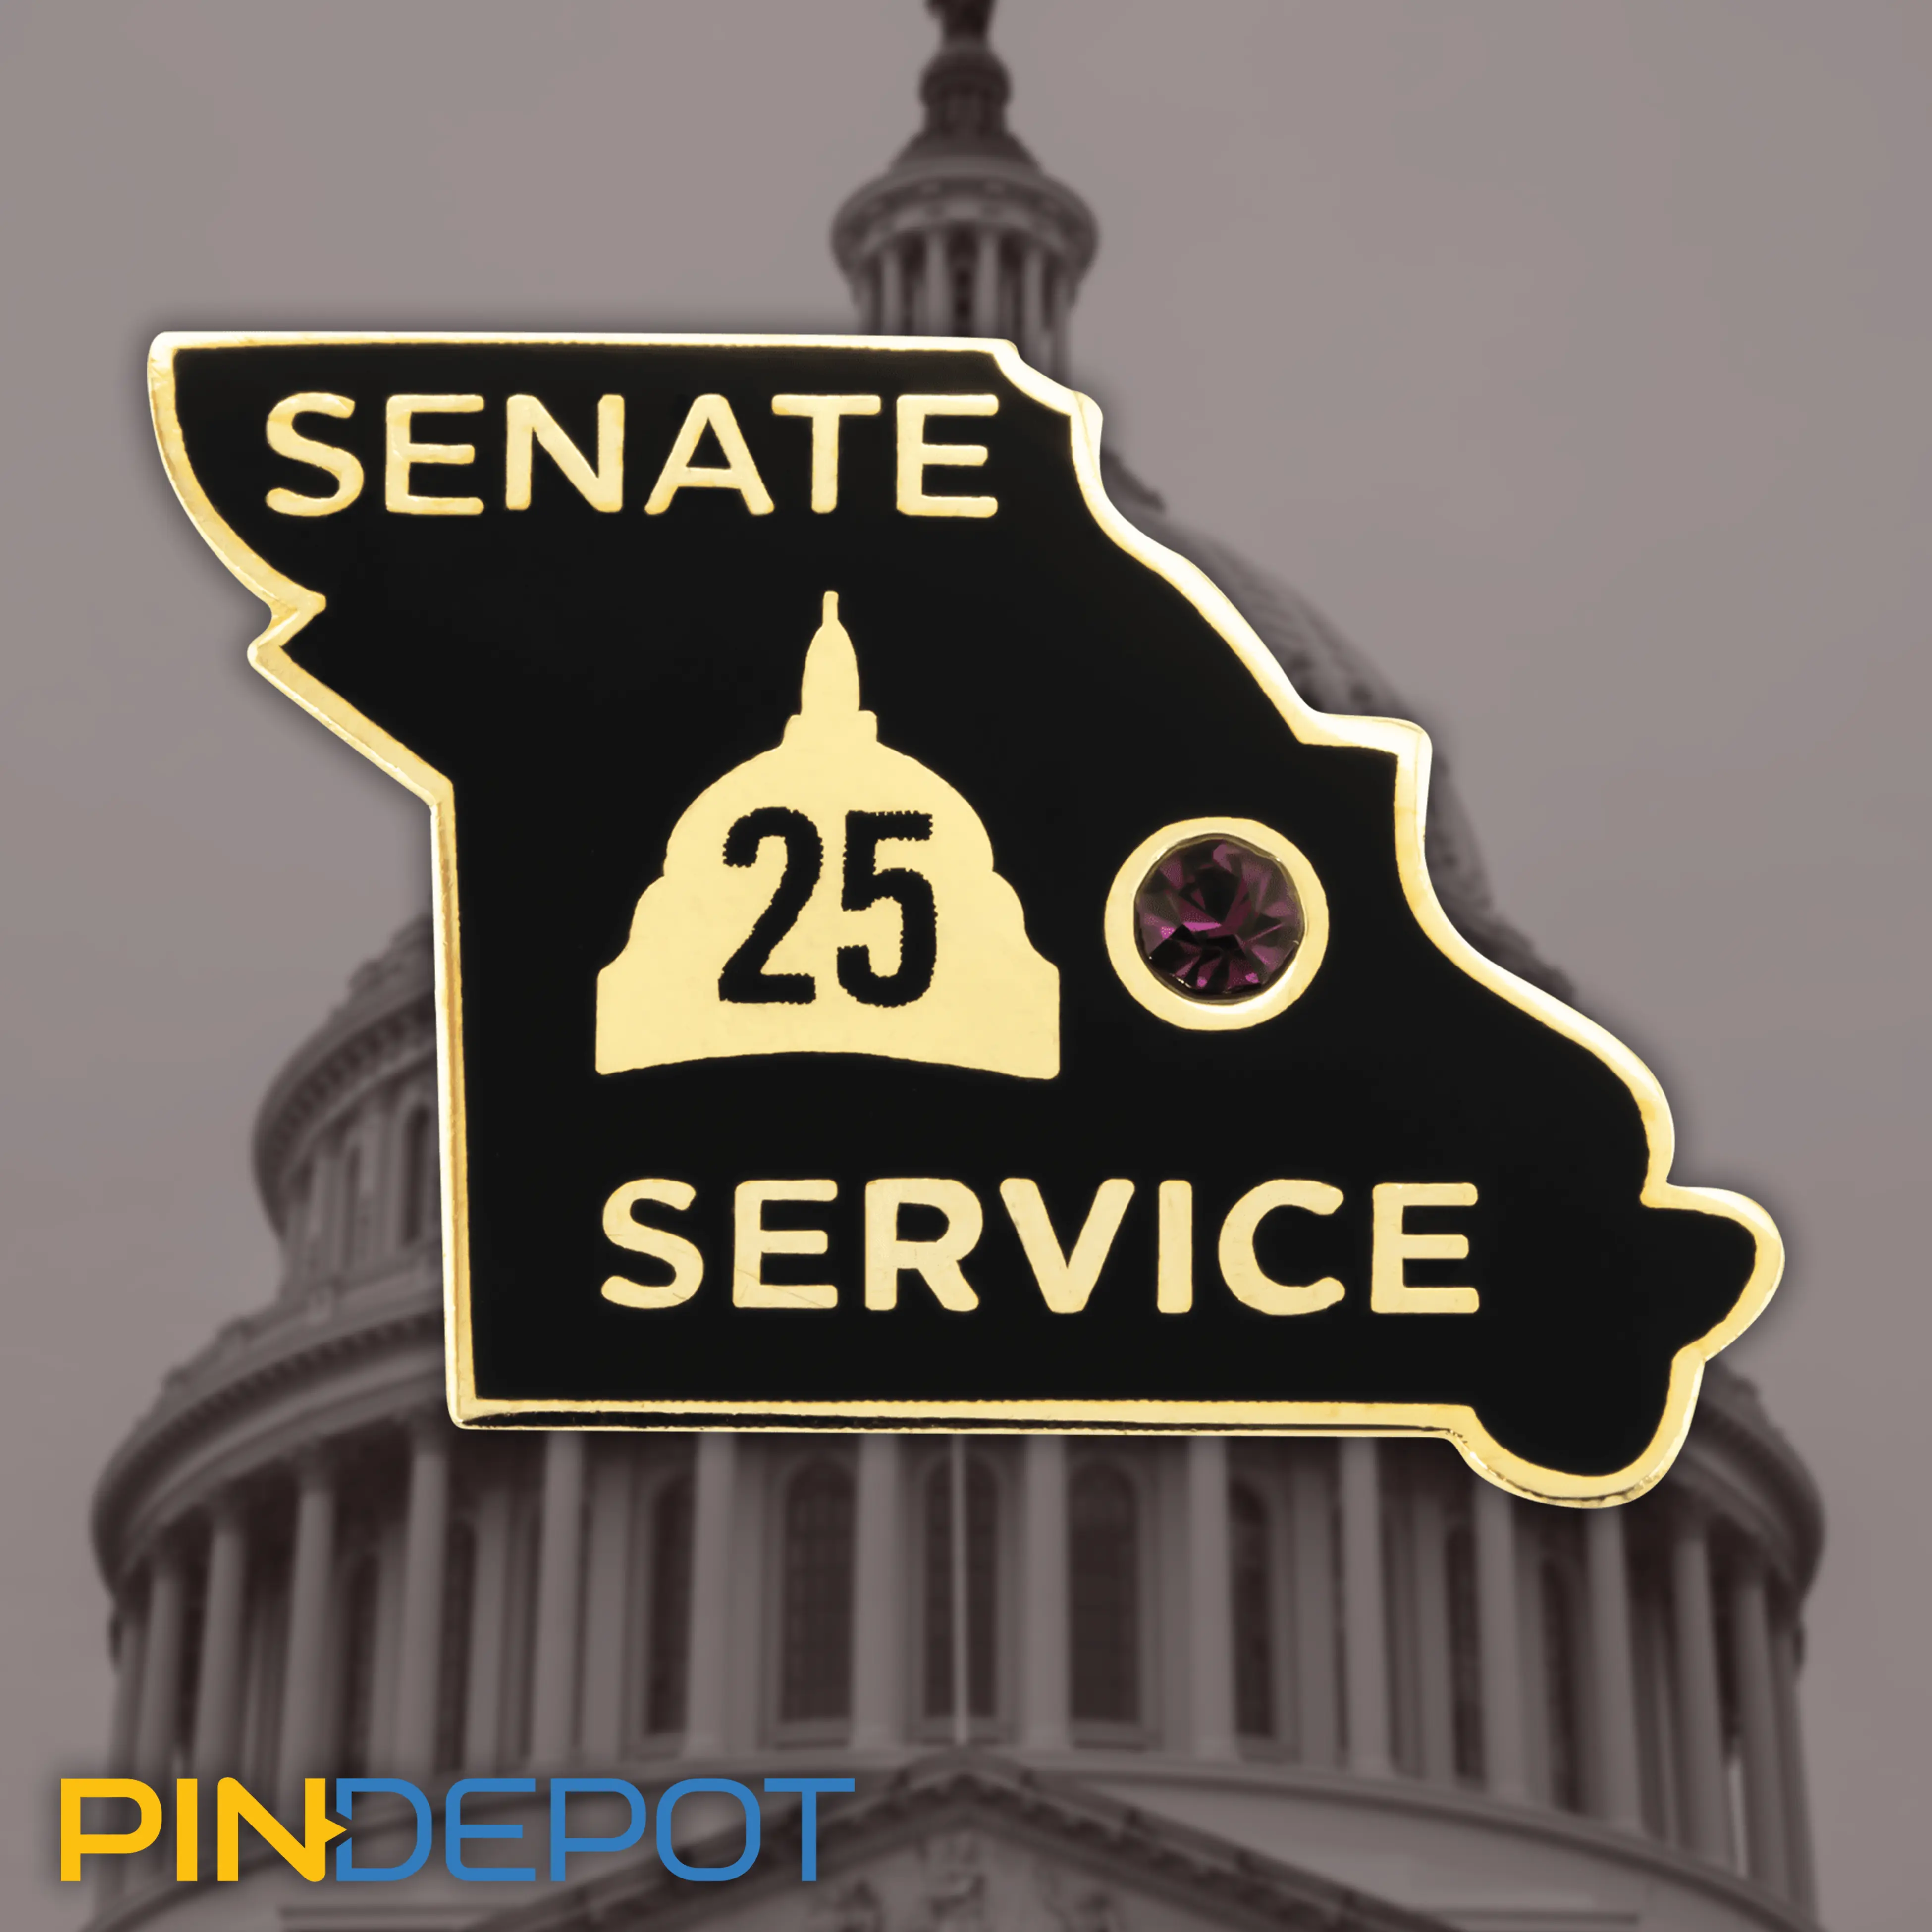 Senate Service - 25 Years-1